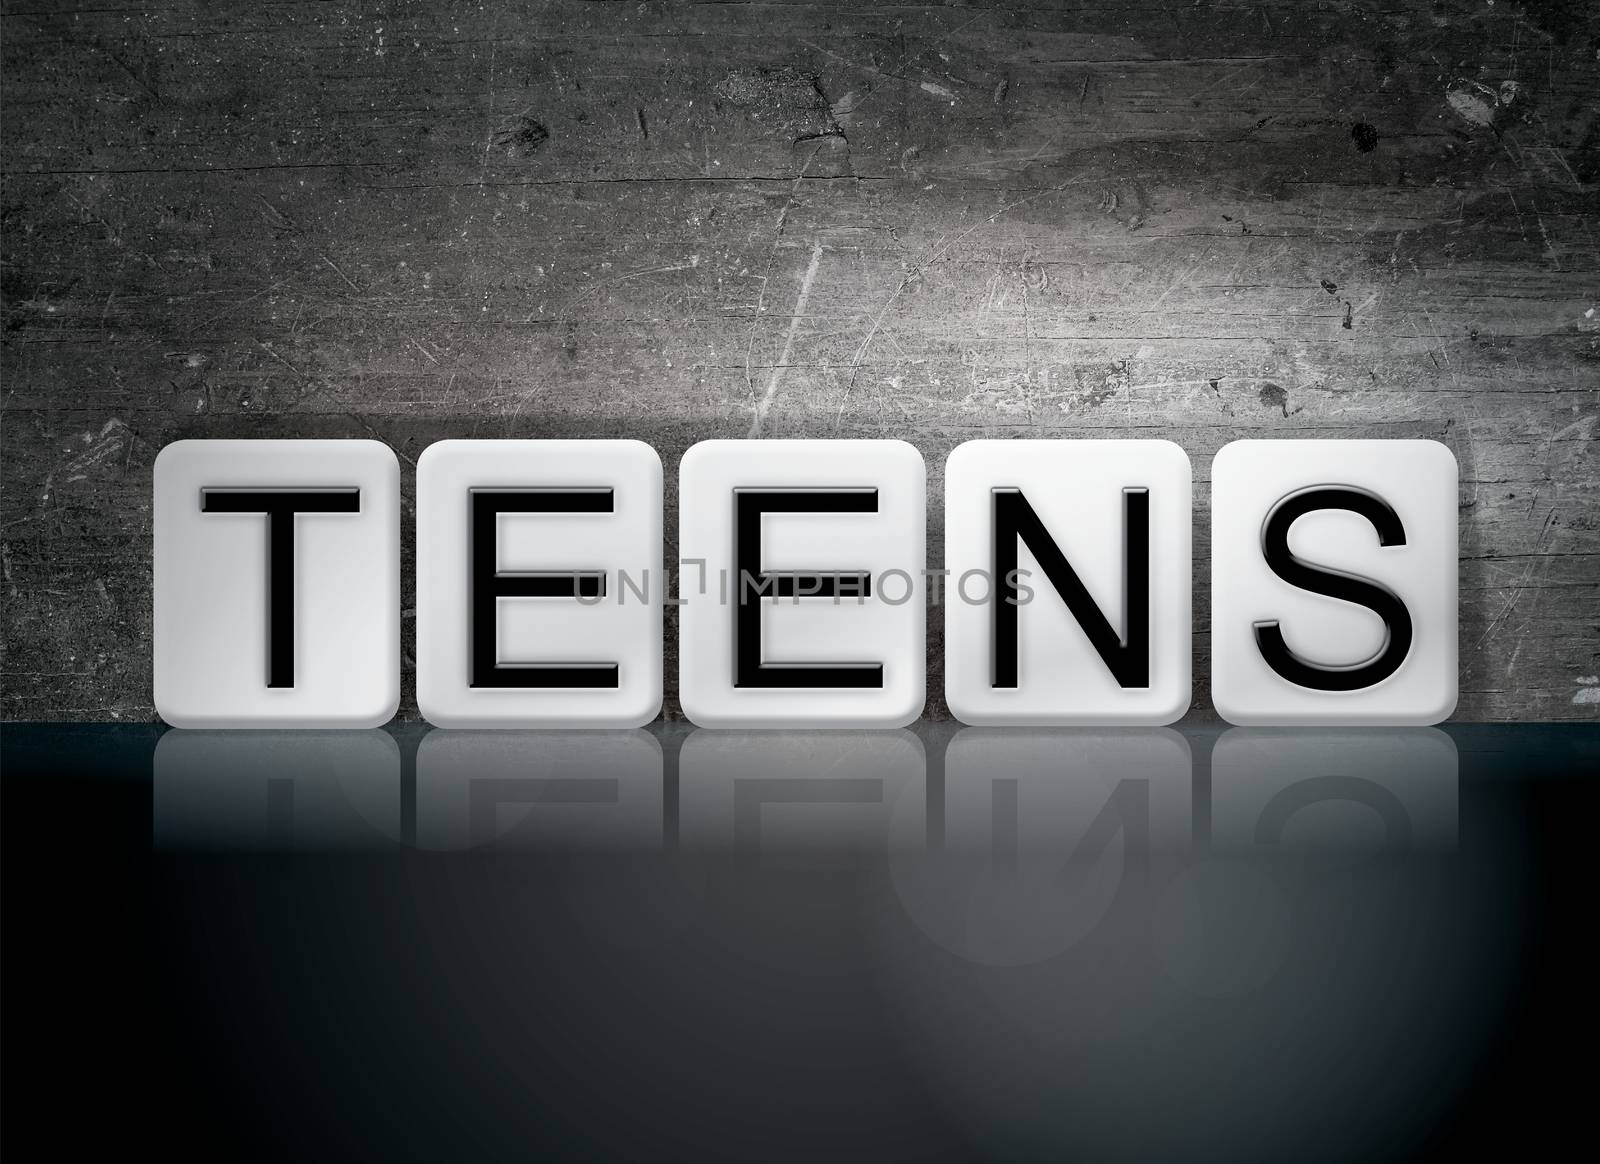 The word "Teens" written in white tiles against a dark vintage grunge background.